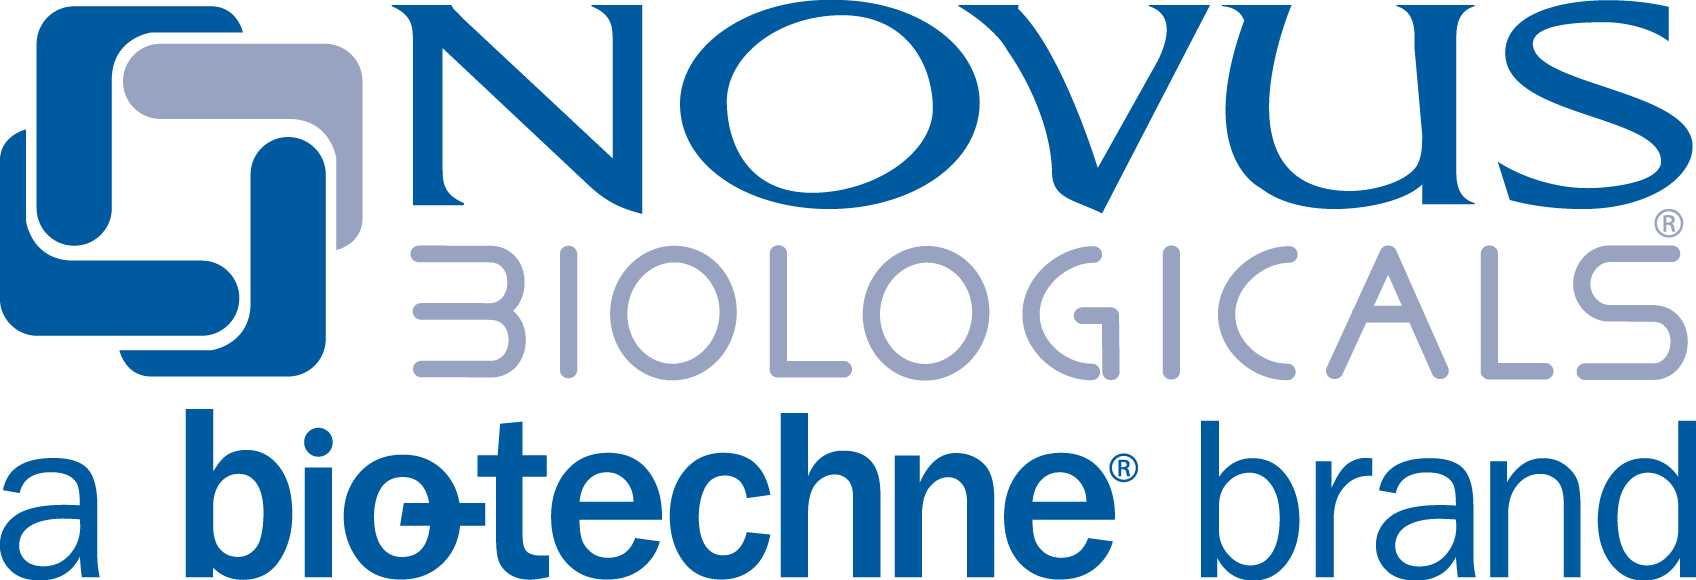 Novus Biologicals 社 抗体 製品情報 ナカライテスク